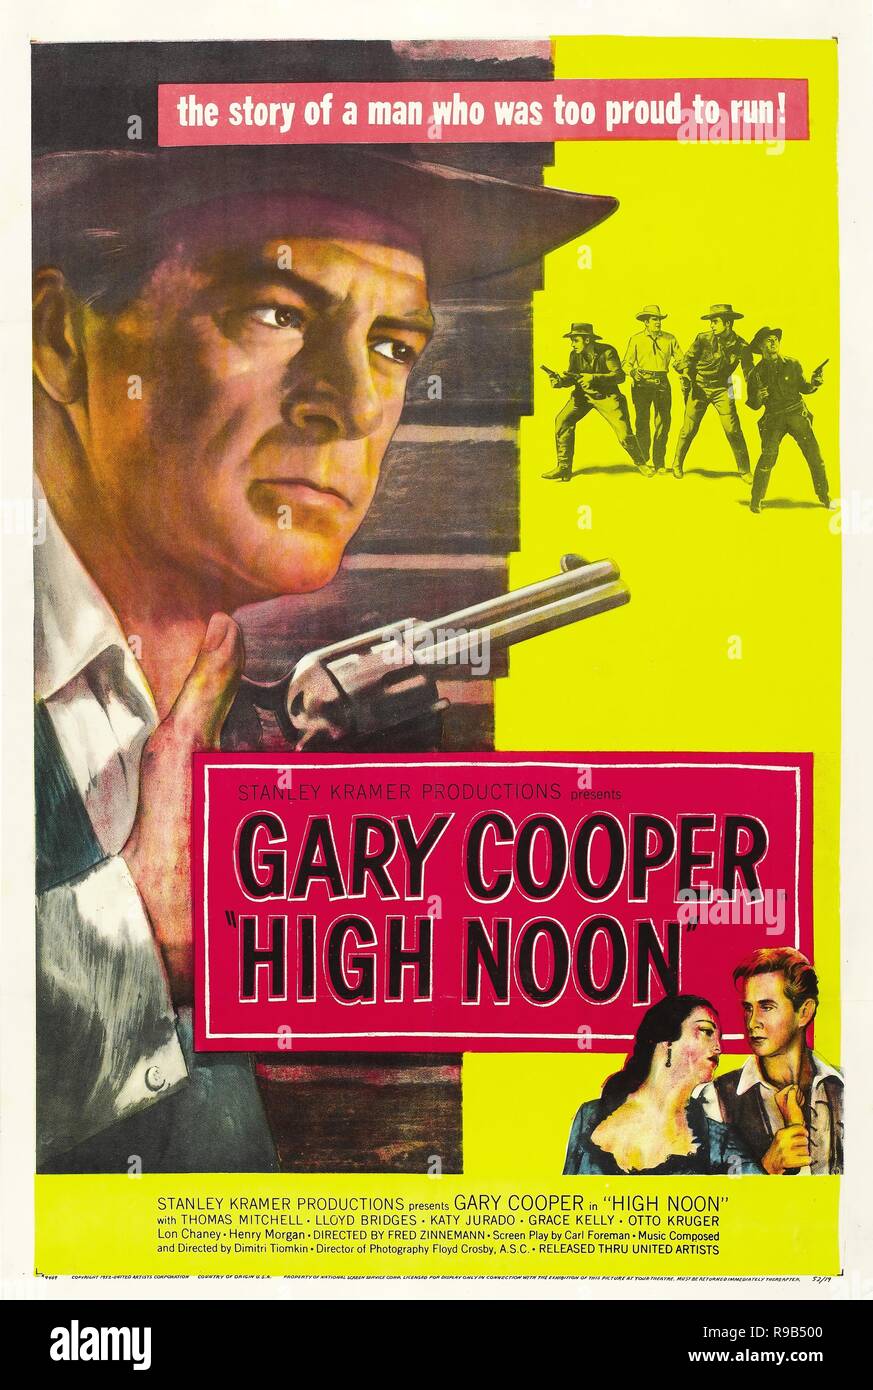 Original film title: HIGH NOON. English title: HIGH NOON. Year: 1952. Director: FRED ZINNEMANN. Credit: STANLEY KRAMER CO./UNITED ARTISTS / Album Stock Photo